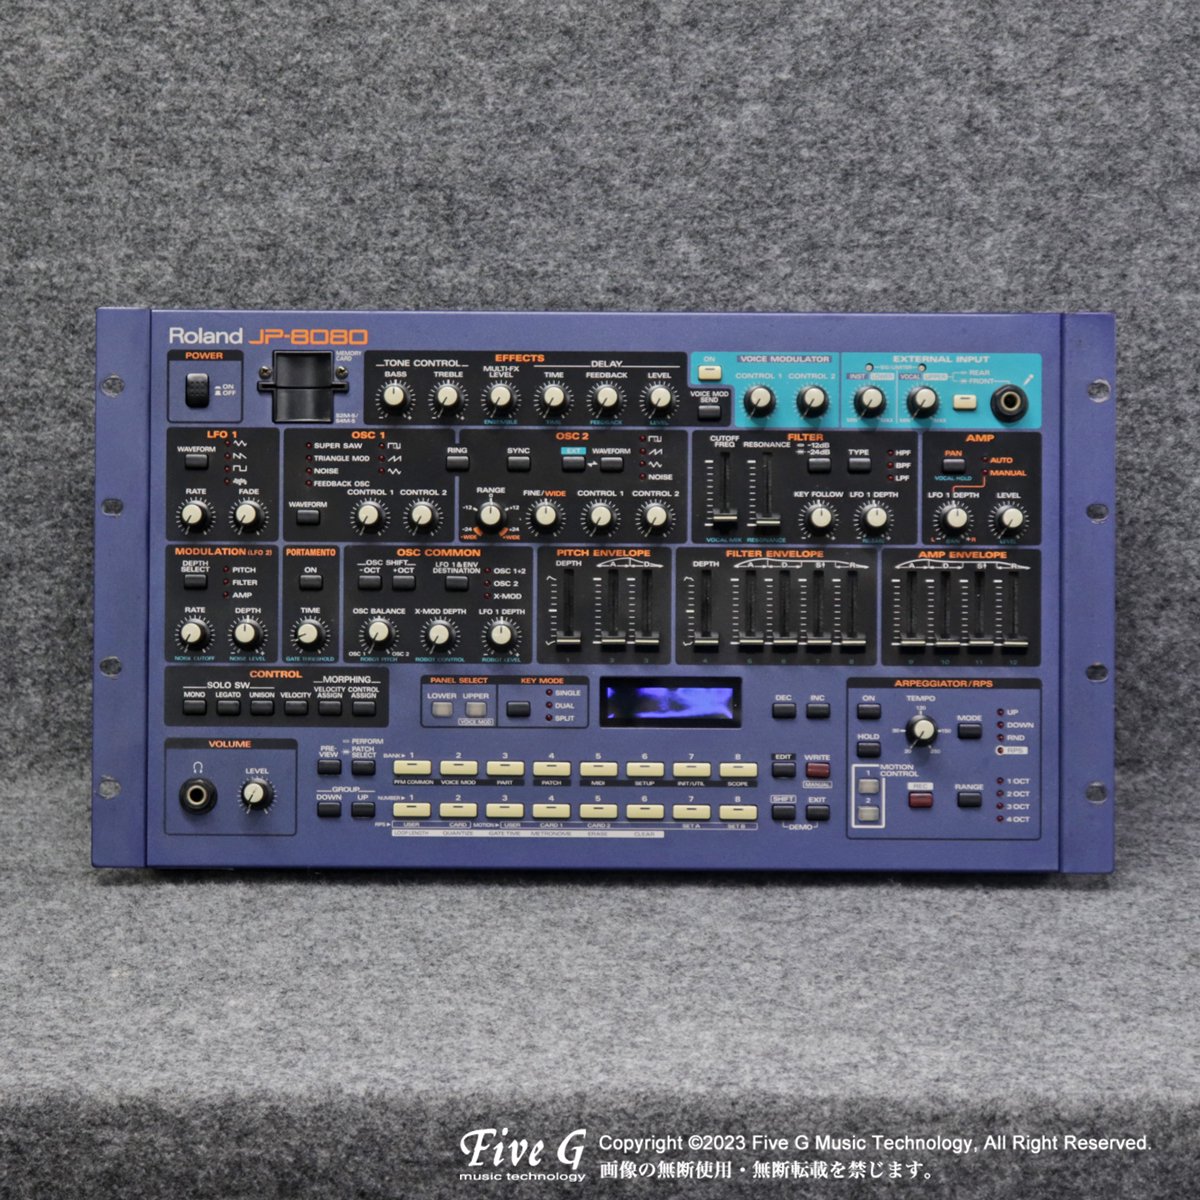 Roland | JP-8080 | 中古 - Used - 音源モジュール | Five G music 